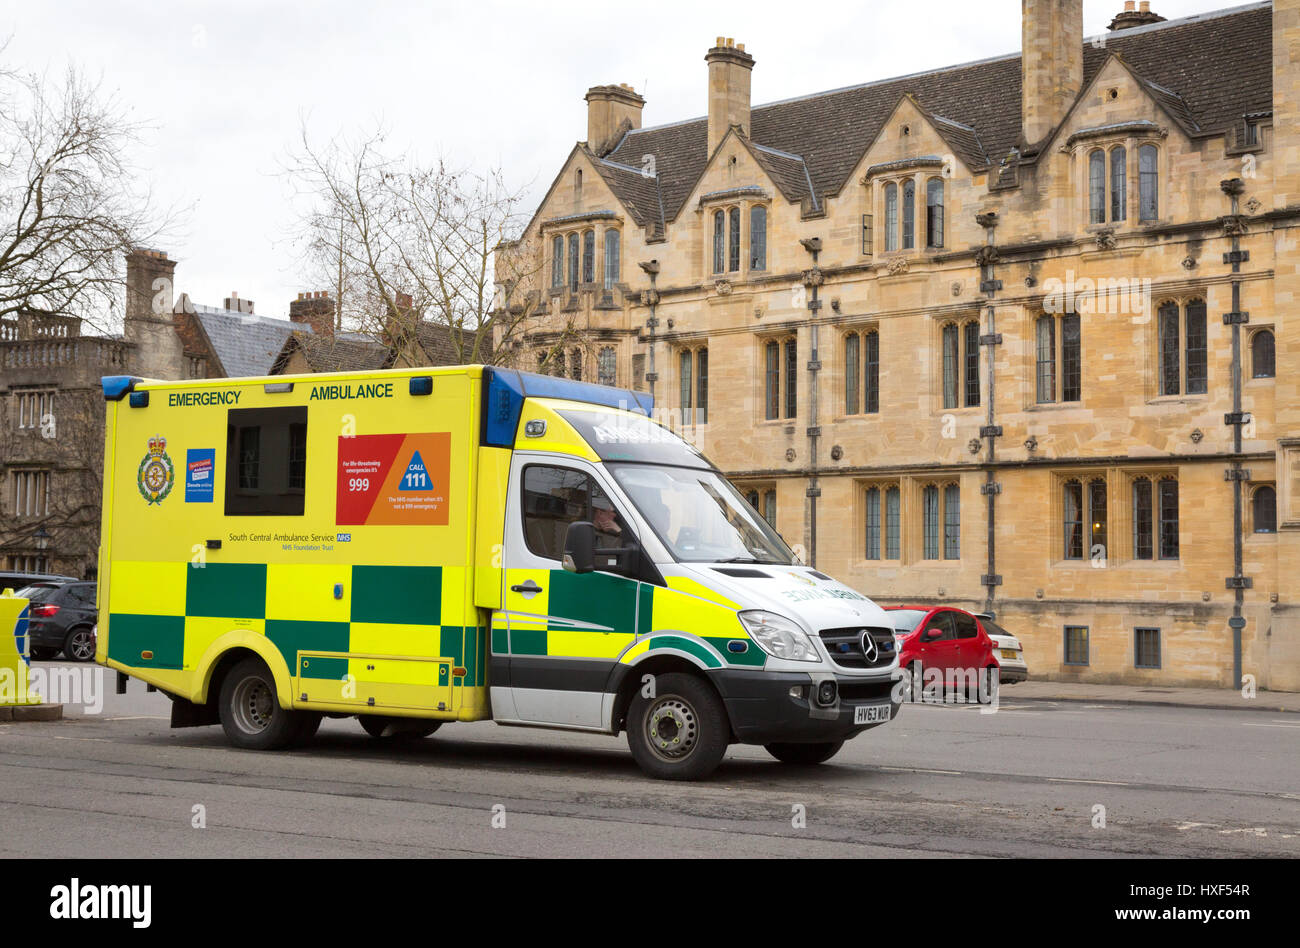 Ambulance UK, - Emergency ambulance on stand by in Oxford, UK Stock Photo